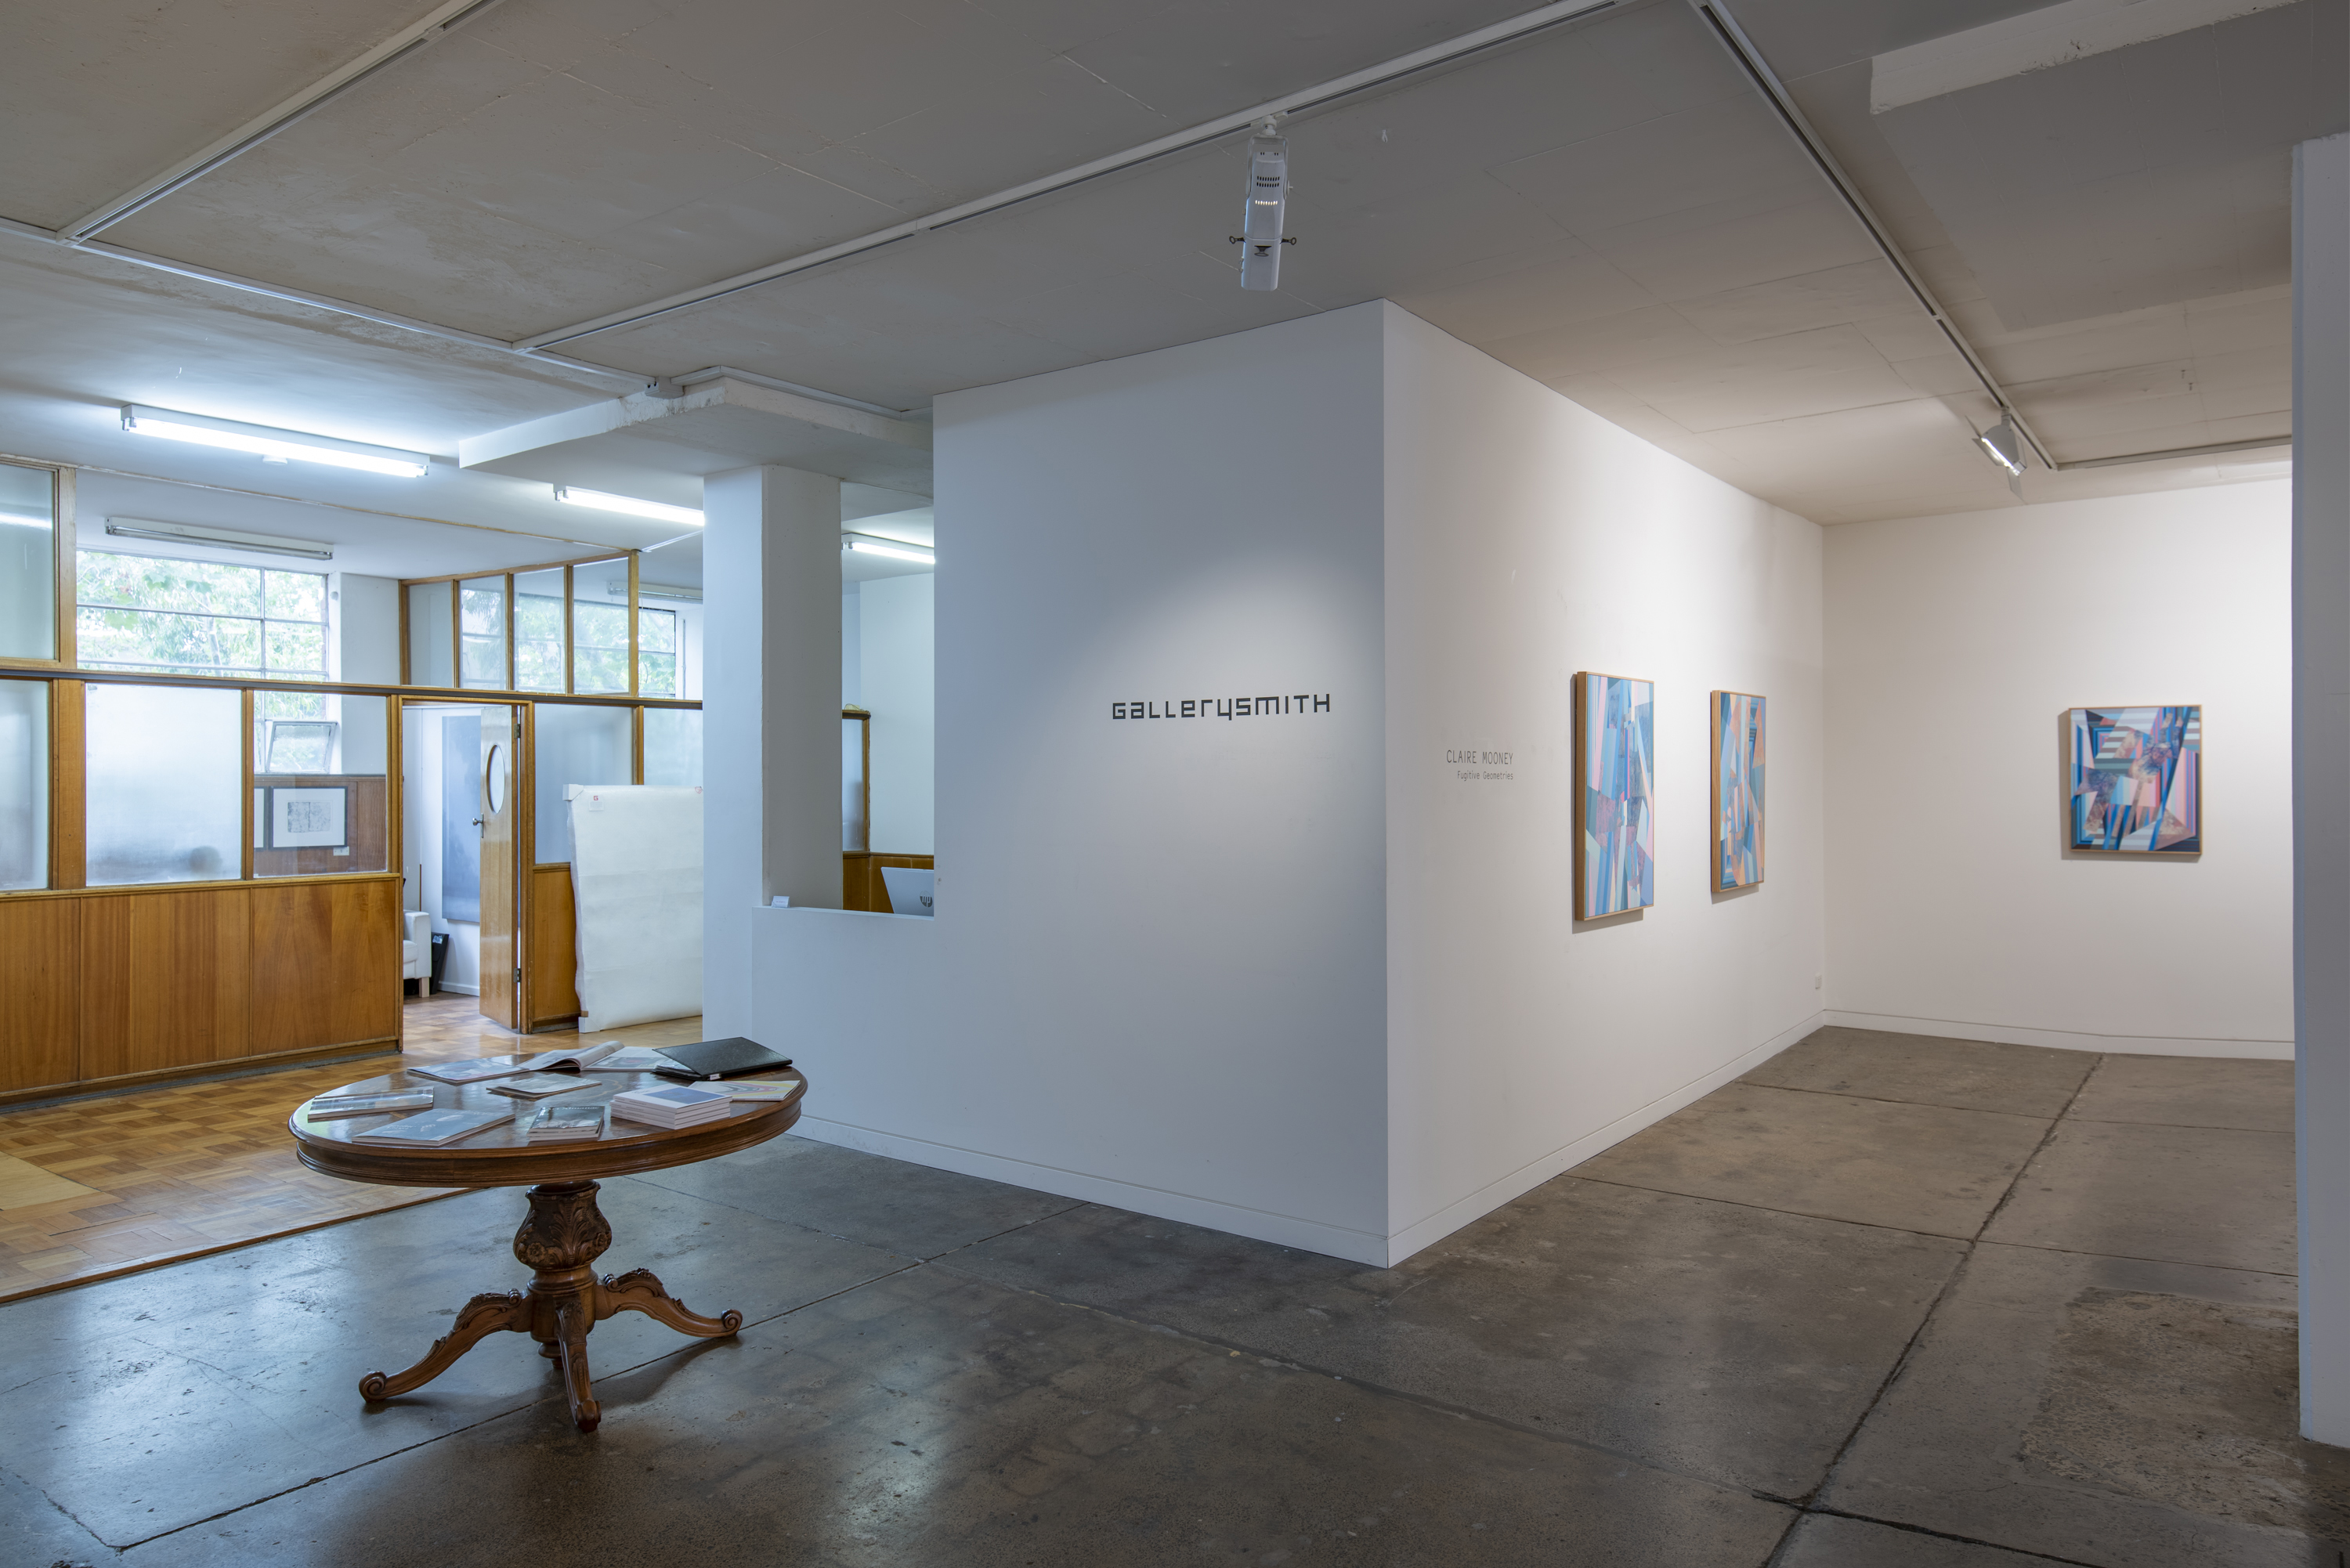 Fugitive Geometries, Gallerysmith 2020